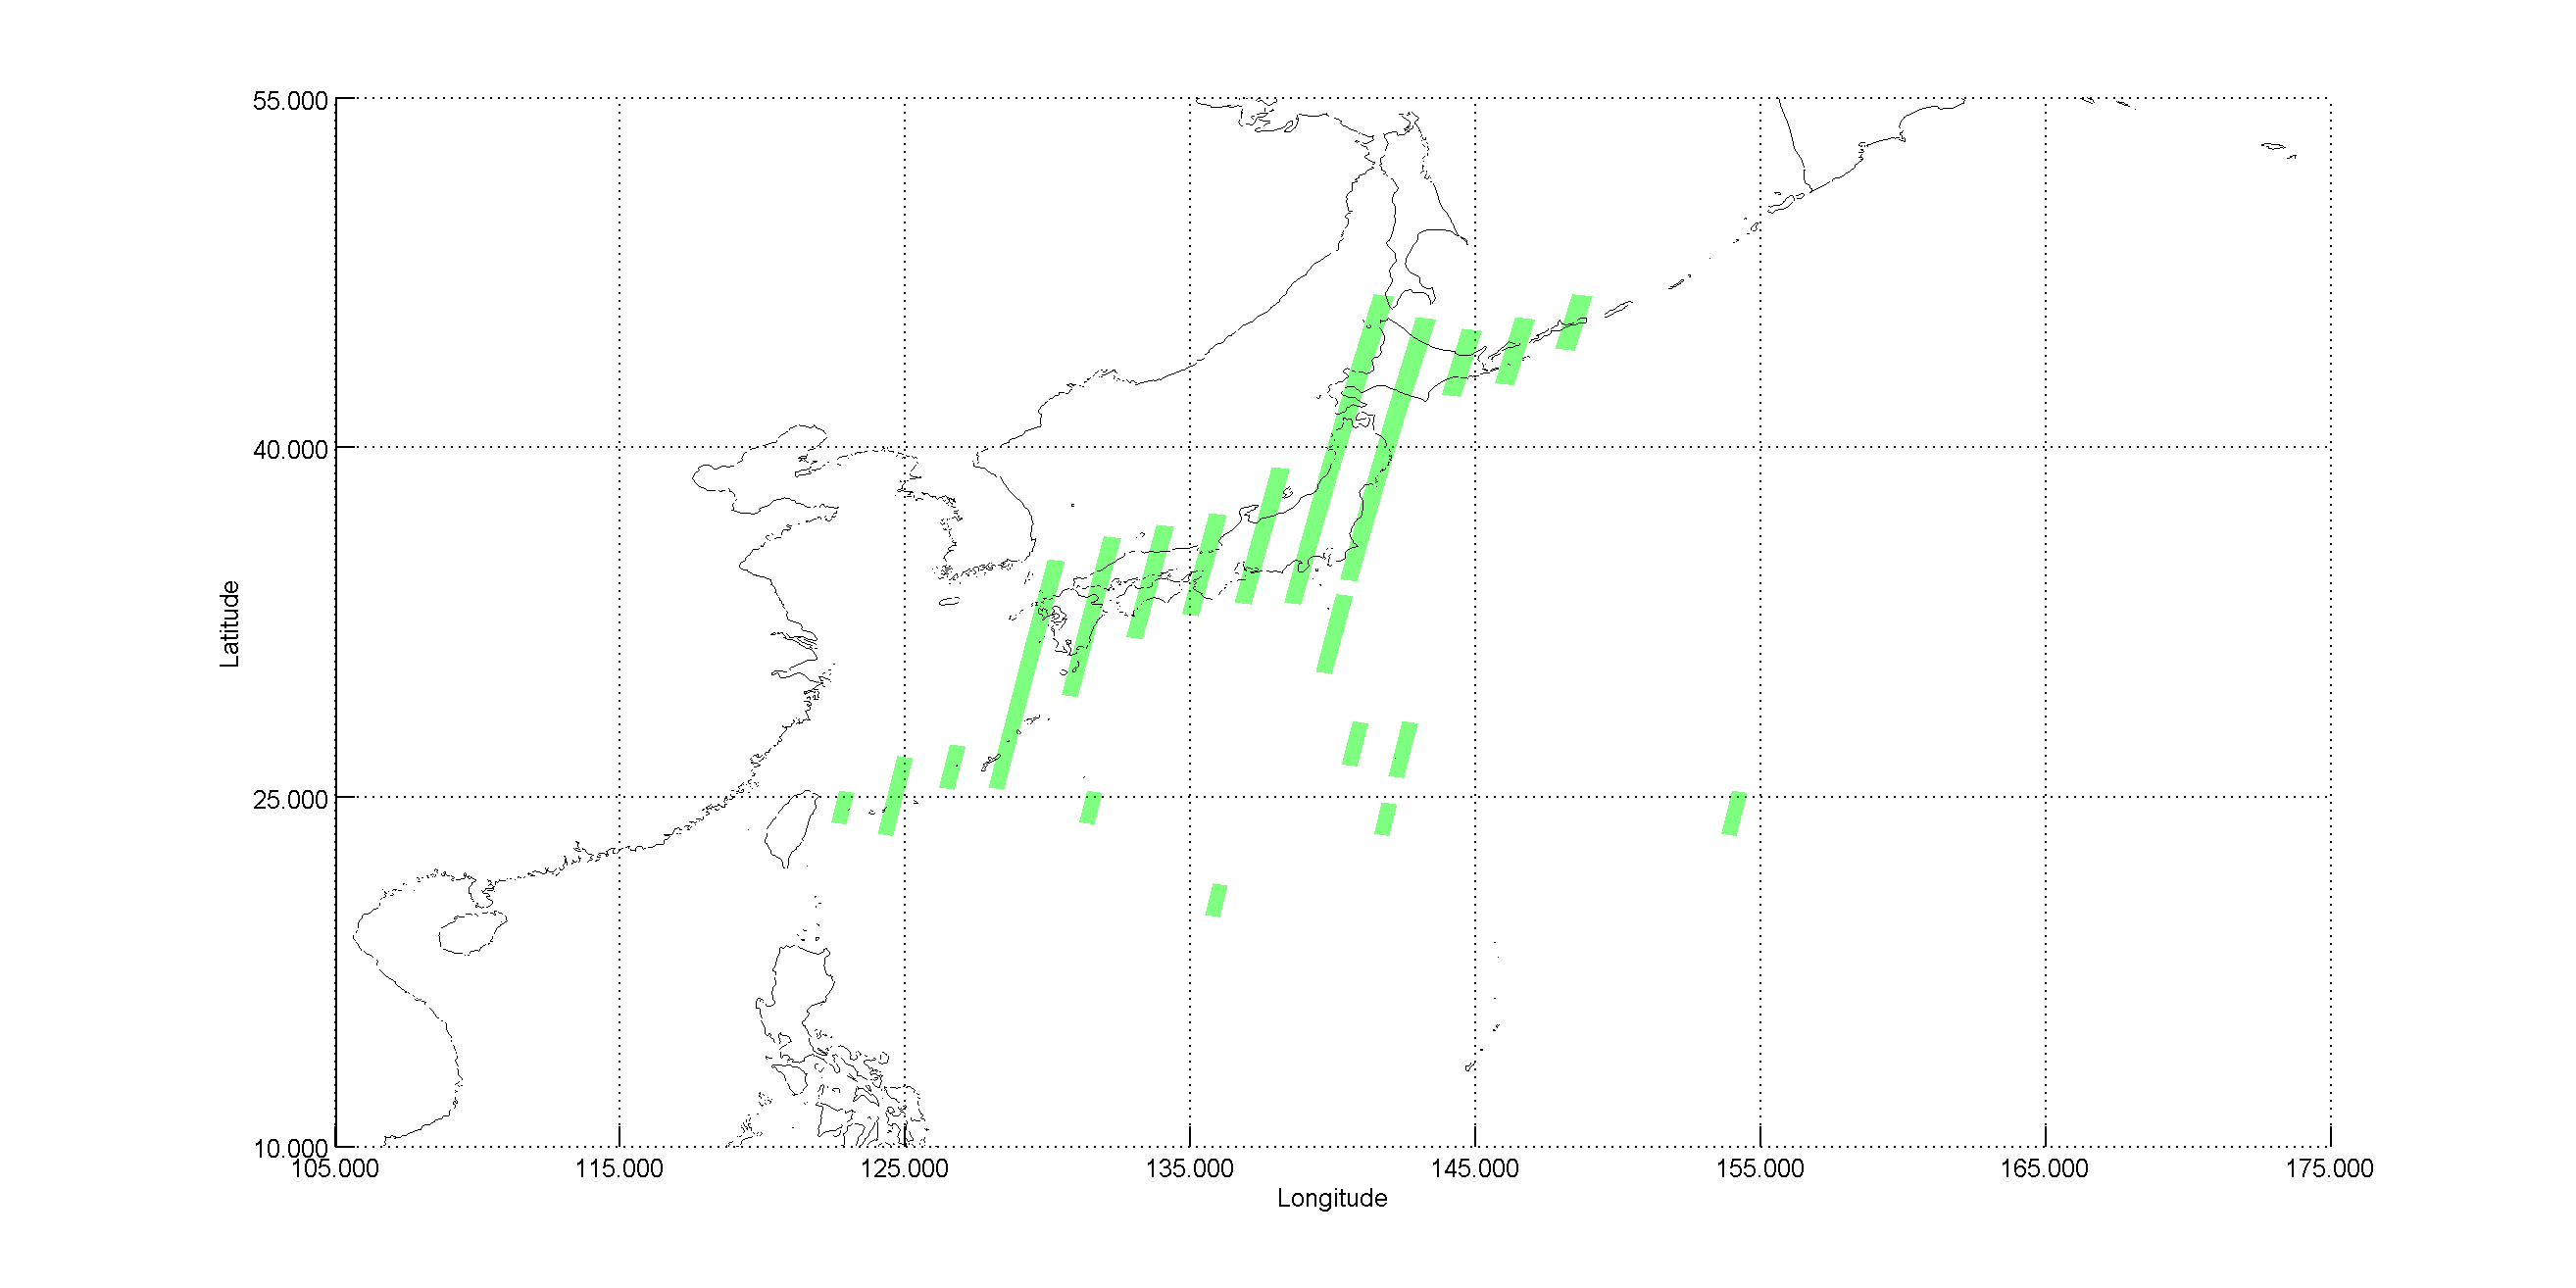 CYCLE_138 - Japan Descending passes